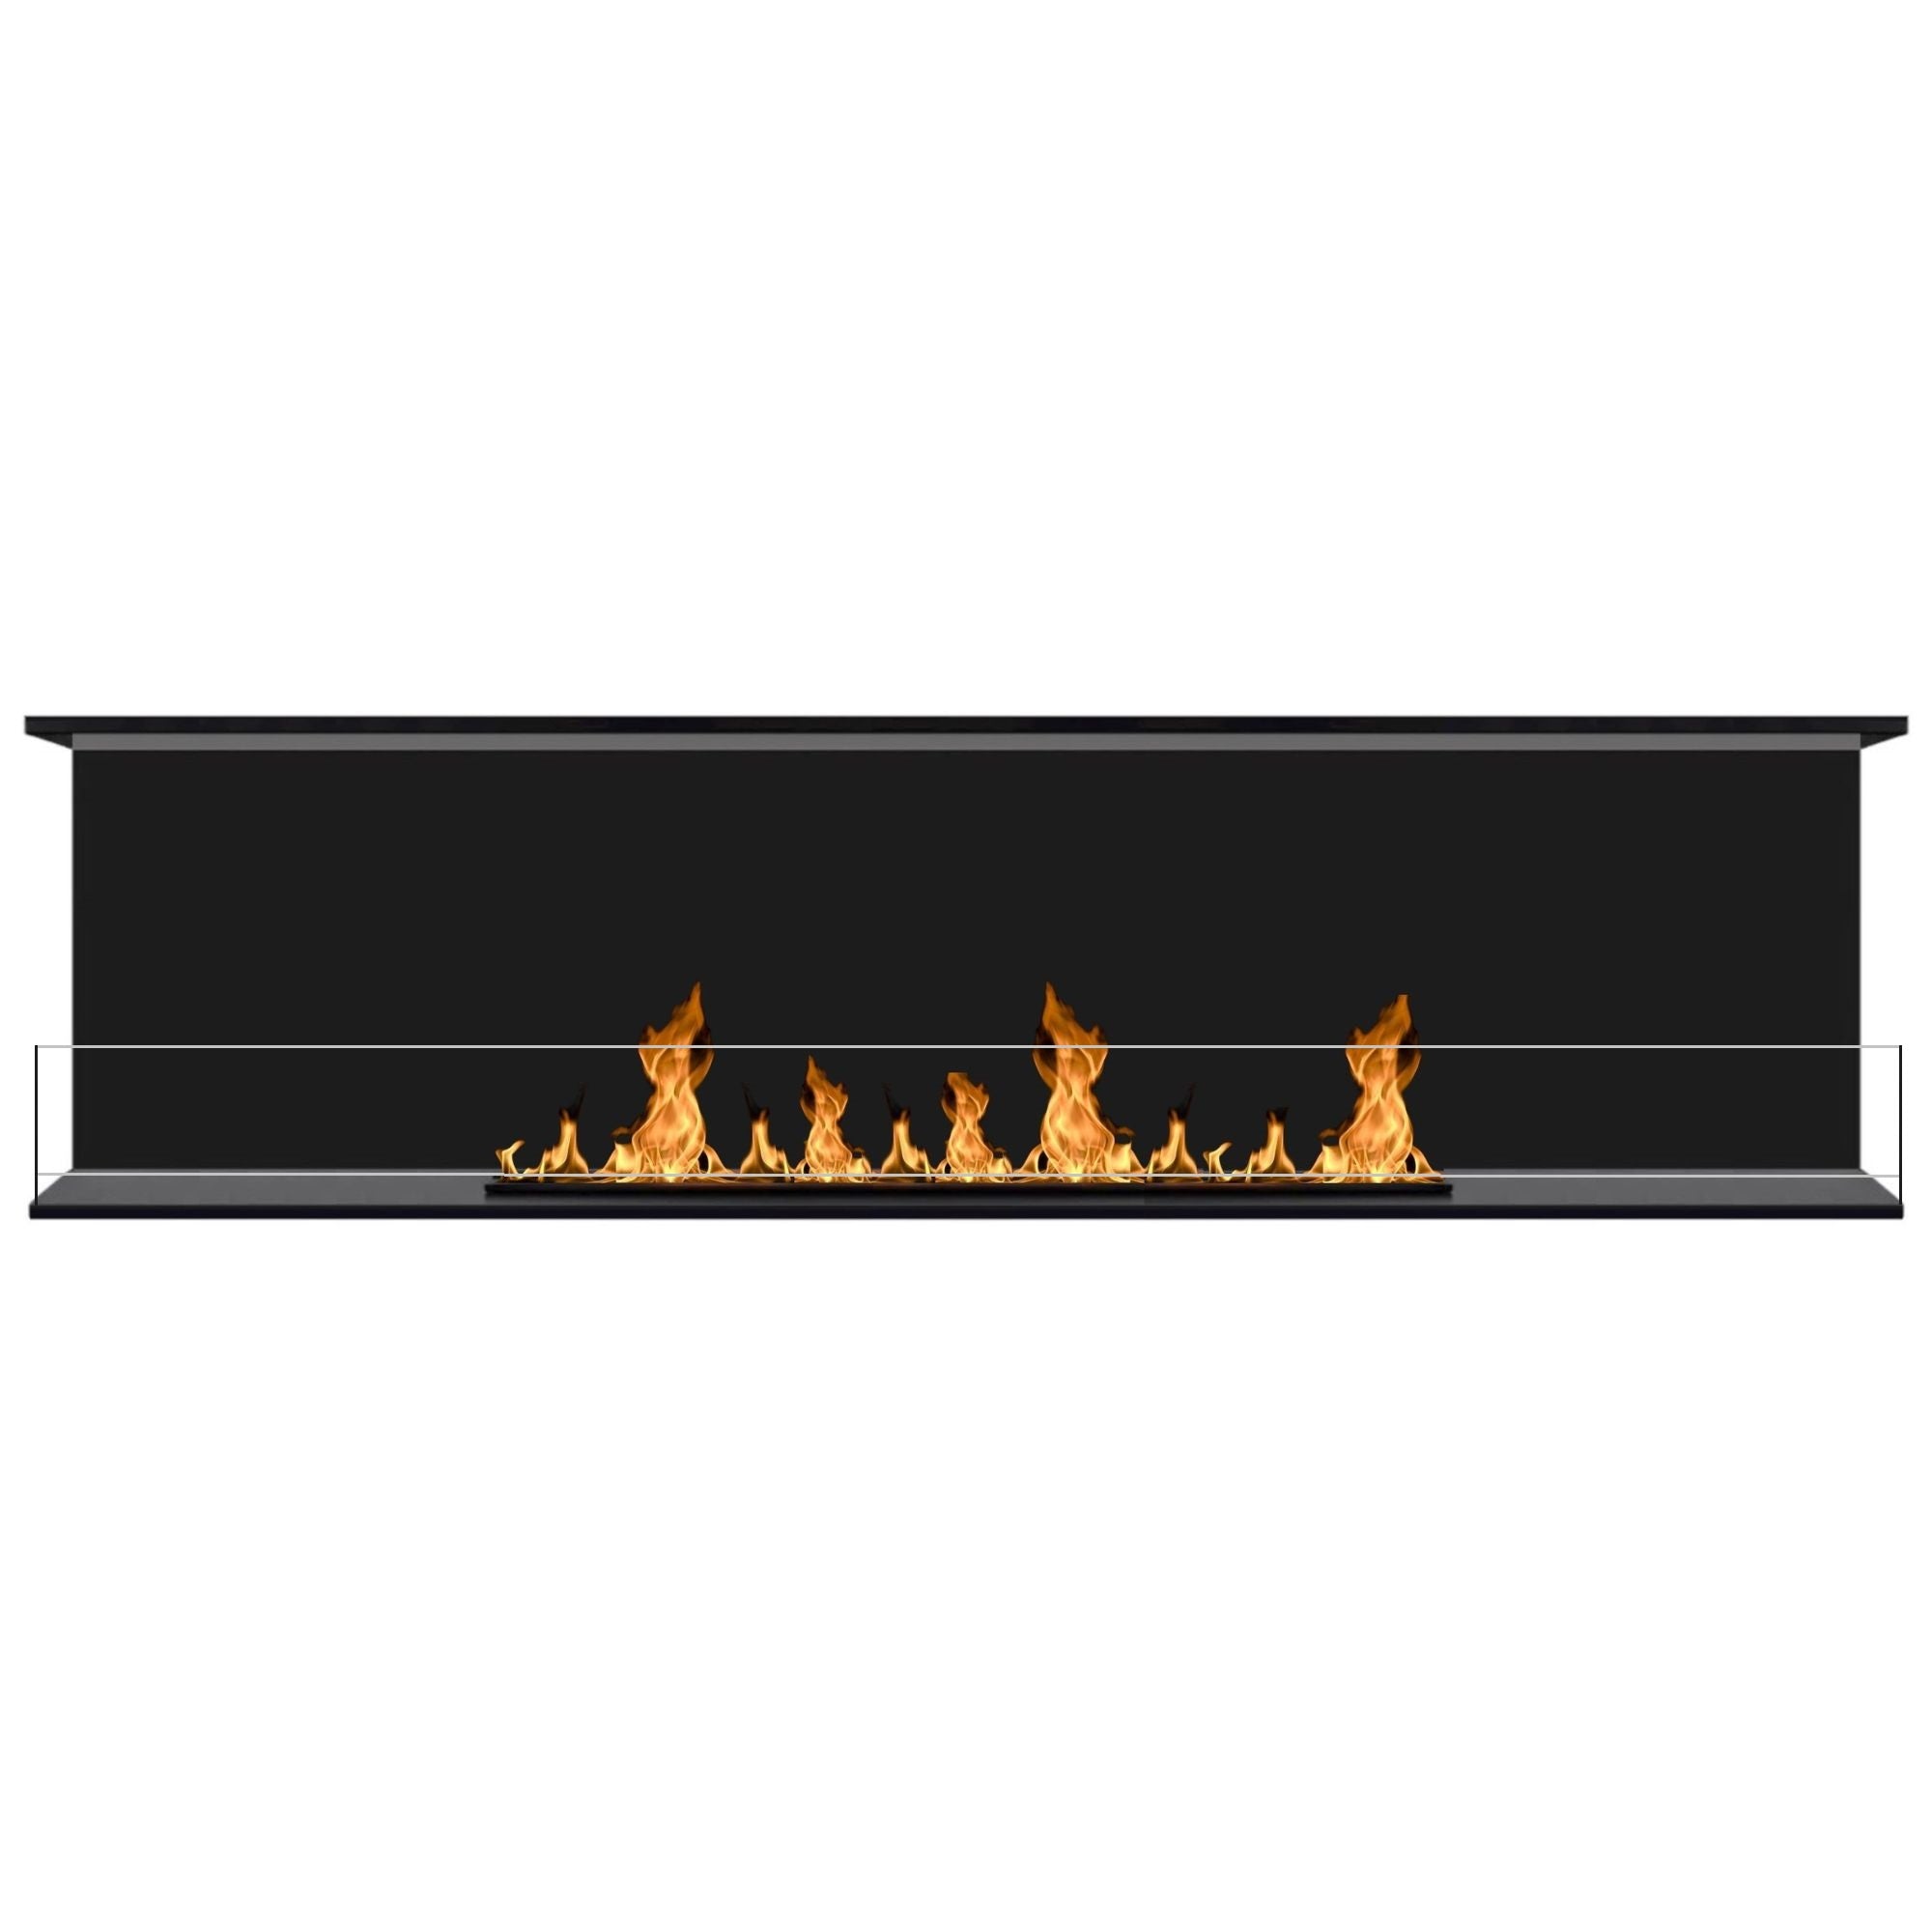 Izala Design Built-in Fireplace 239 CM